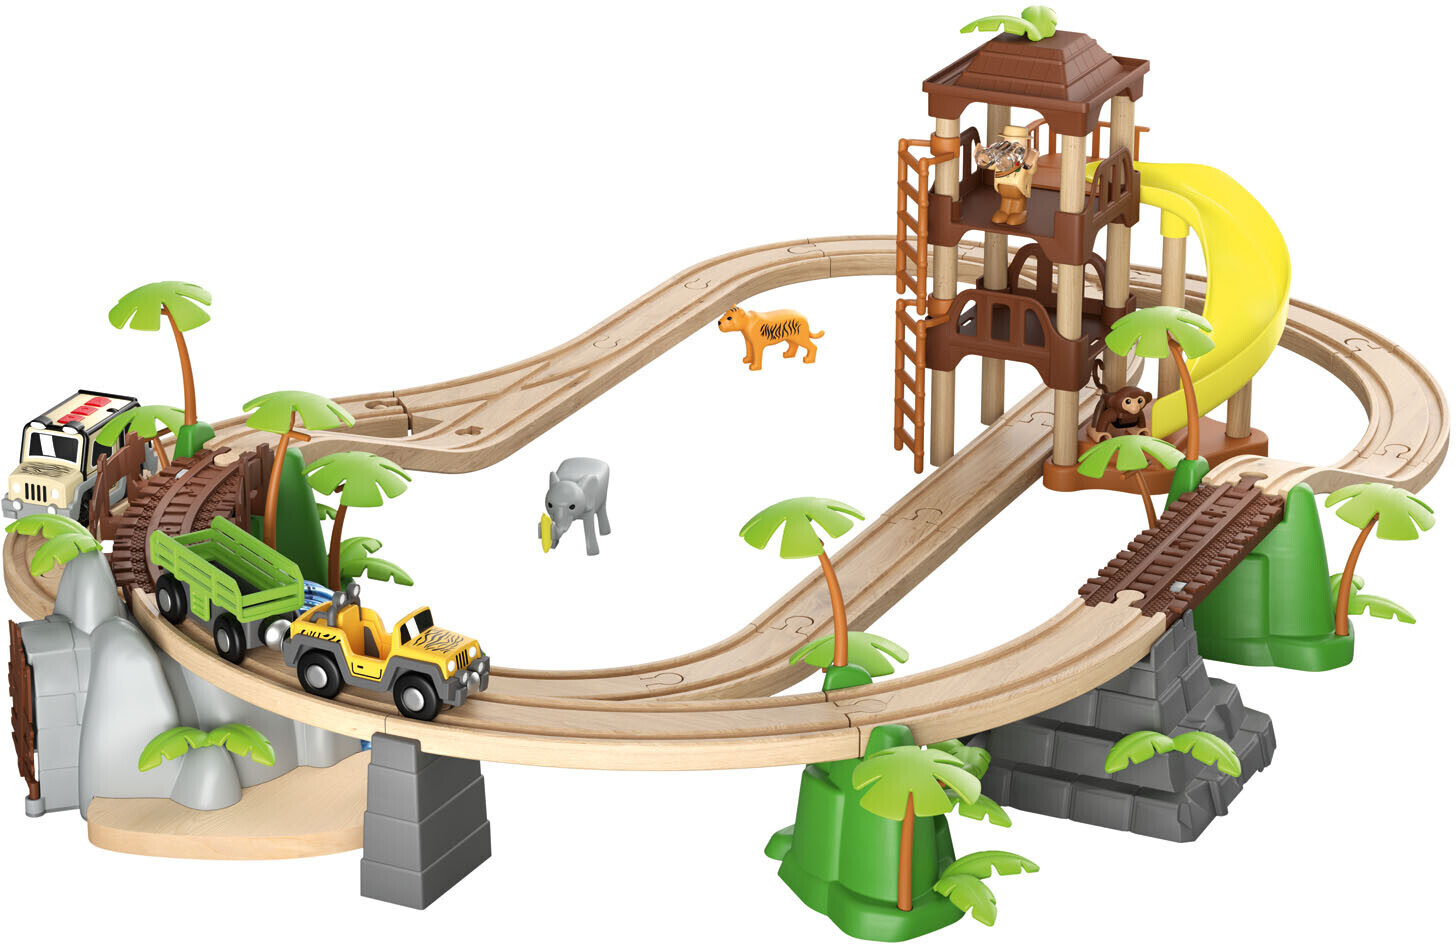 ab bei 47-teilig aus (Februar Eisenbahn-Set Preisvergleich Preise) € Holz 2024 Dschungel | 34,99 Playtive